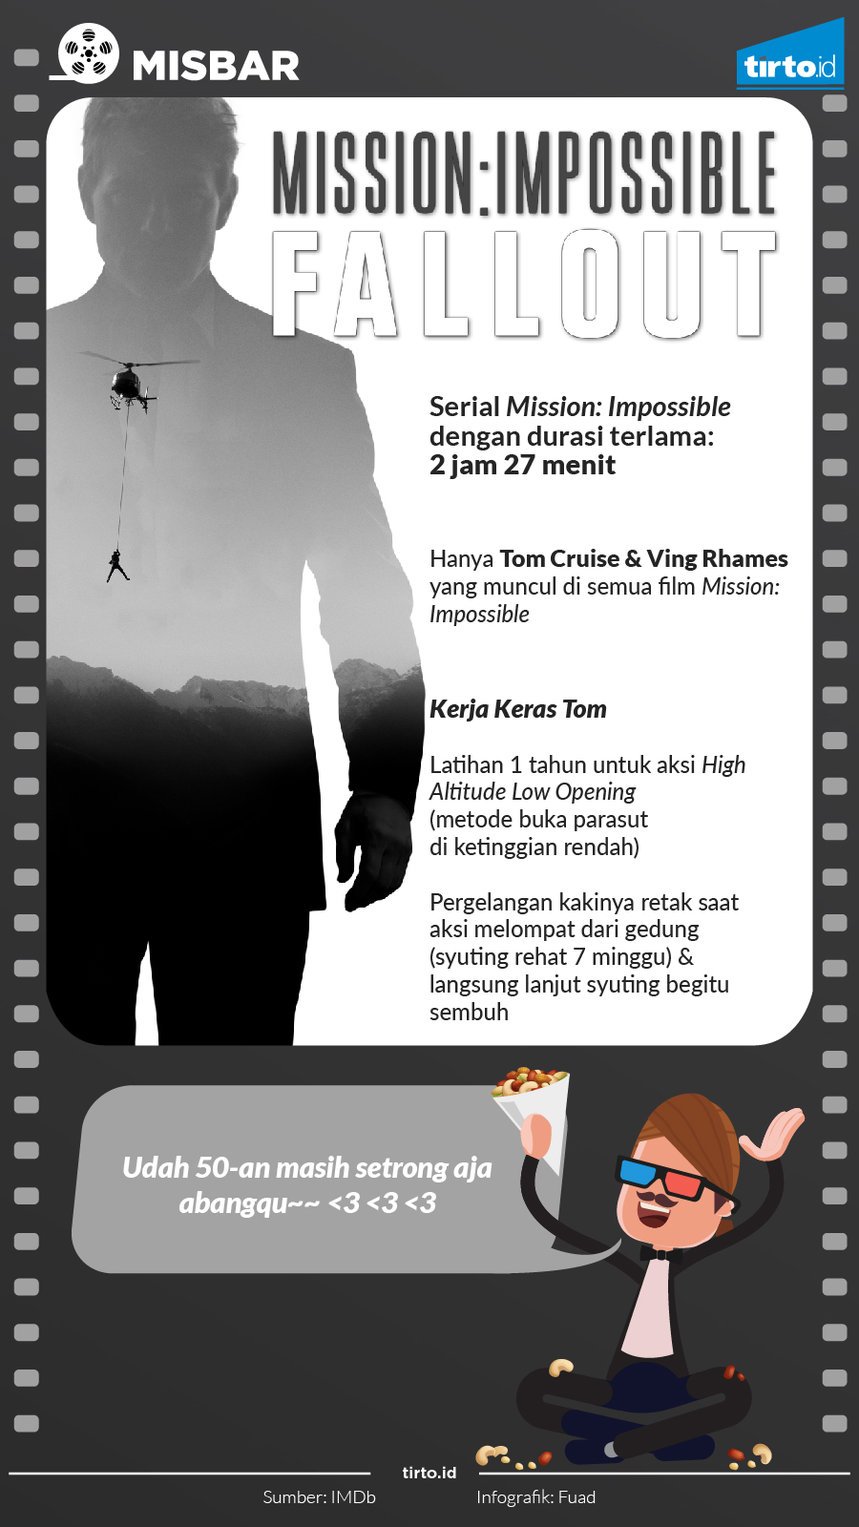 Infografik Misbar Mission Impossible fallout